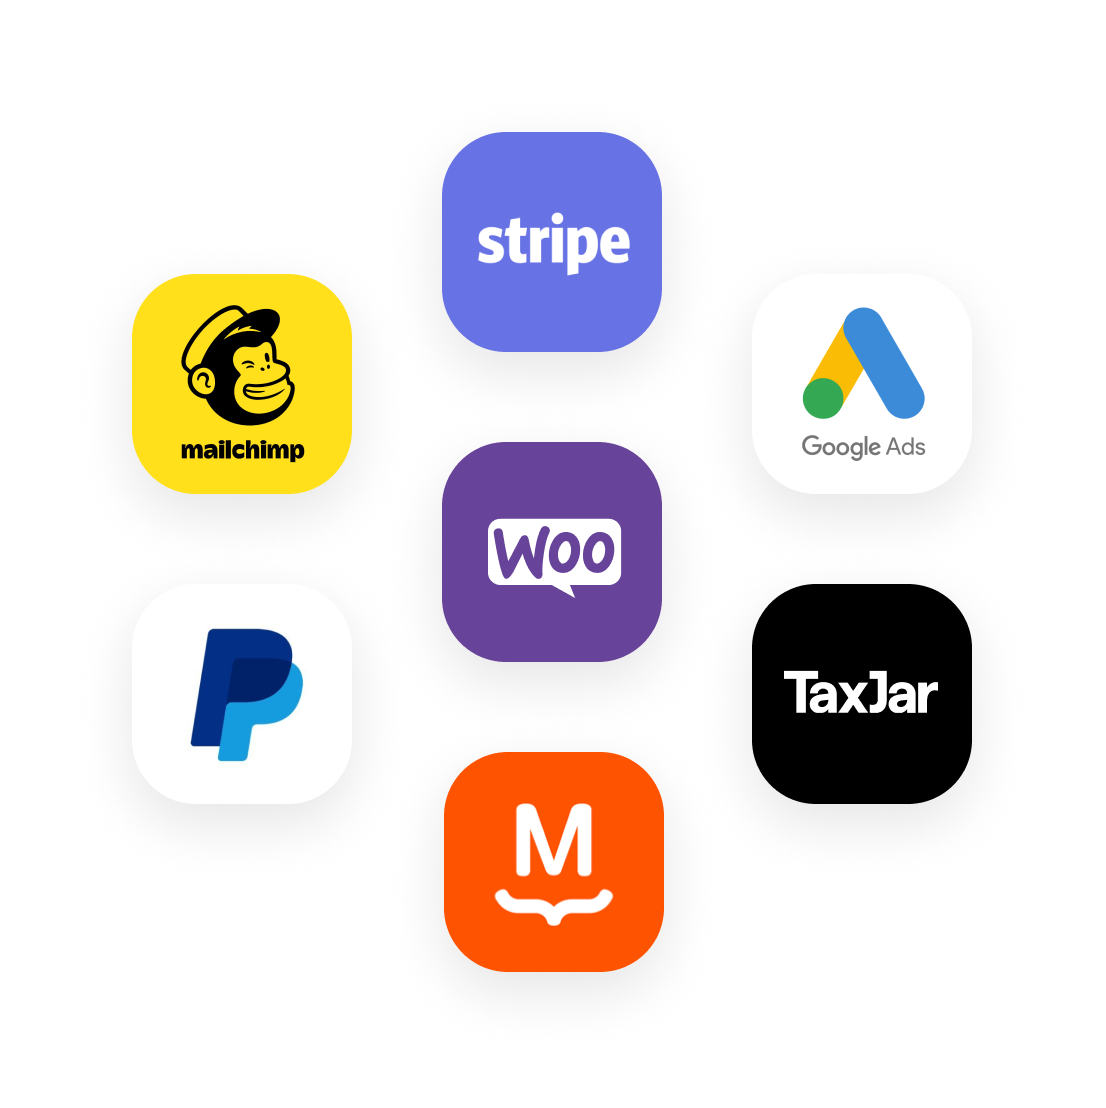 Logá pre výber produktov kompatibilných s WooCommerce: Stripe, Google Ads, TaxJar, MailChimp, PayPal a MailPoet.